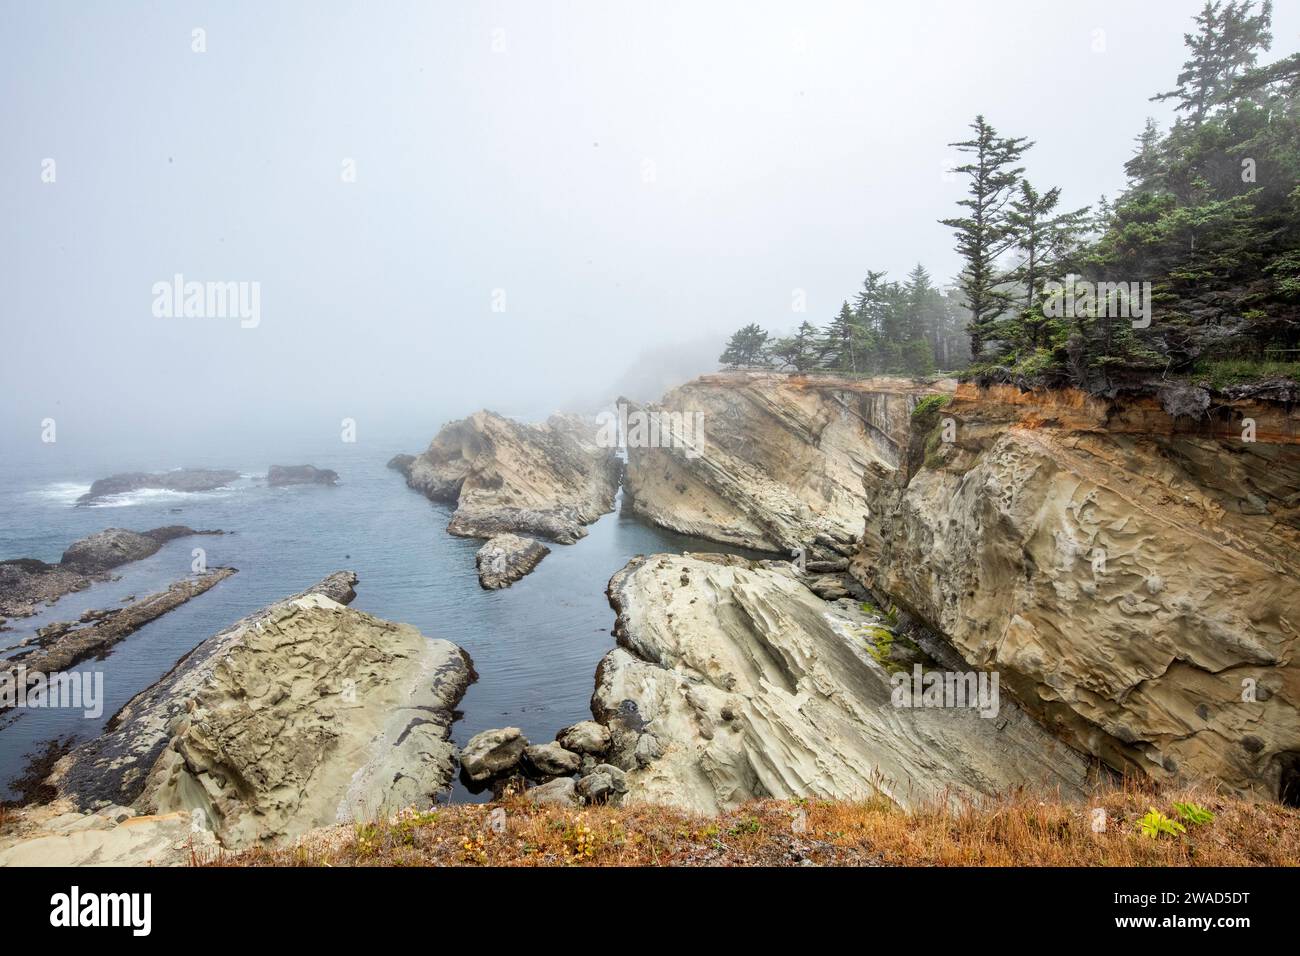 USA, Oregon, Coos Bay, Rock formations along sea at foggy day Stock Photo